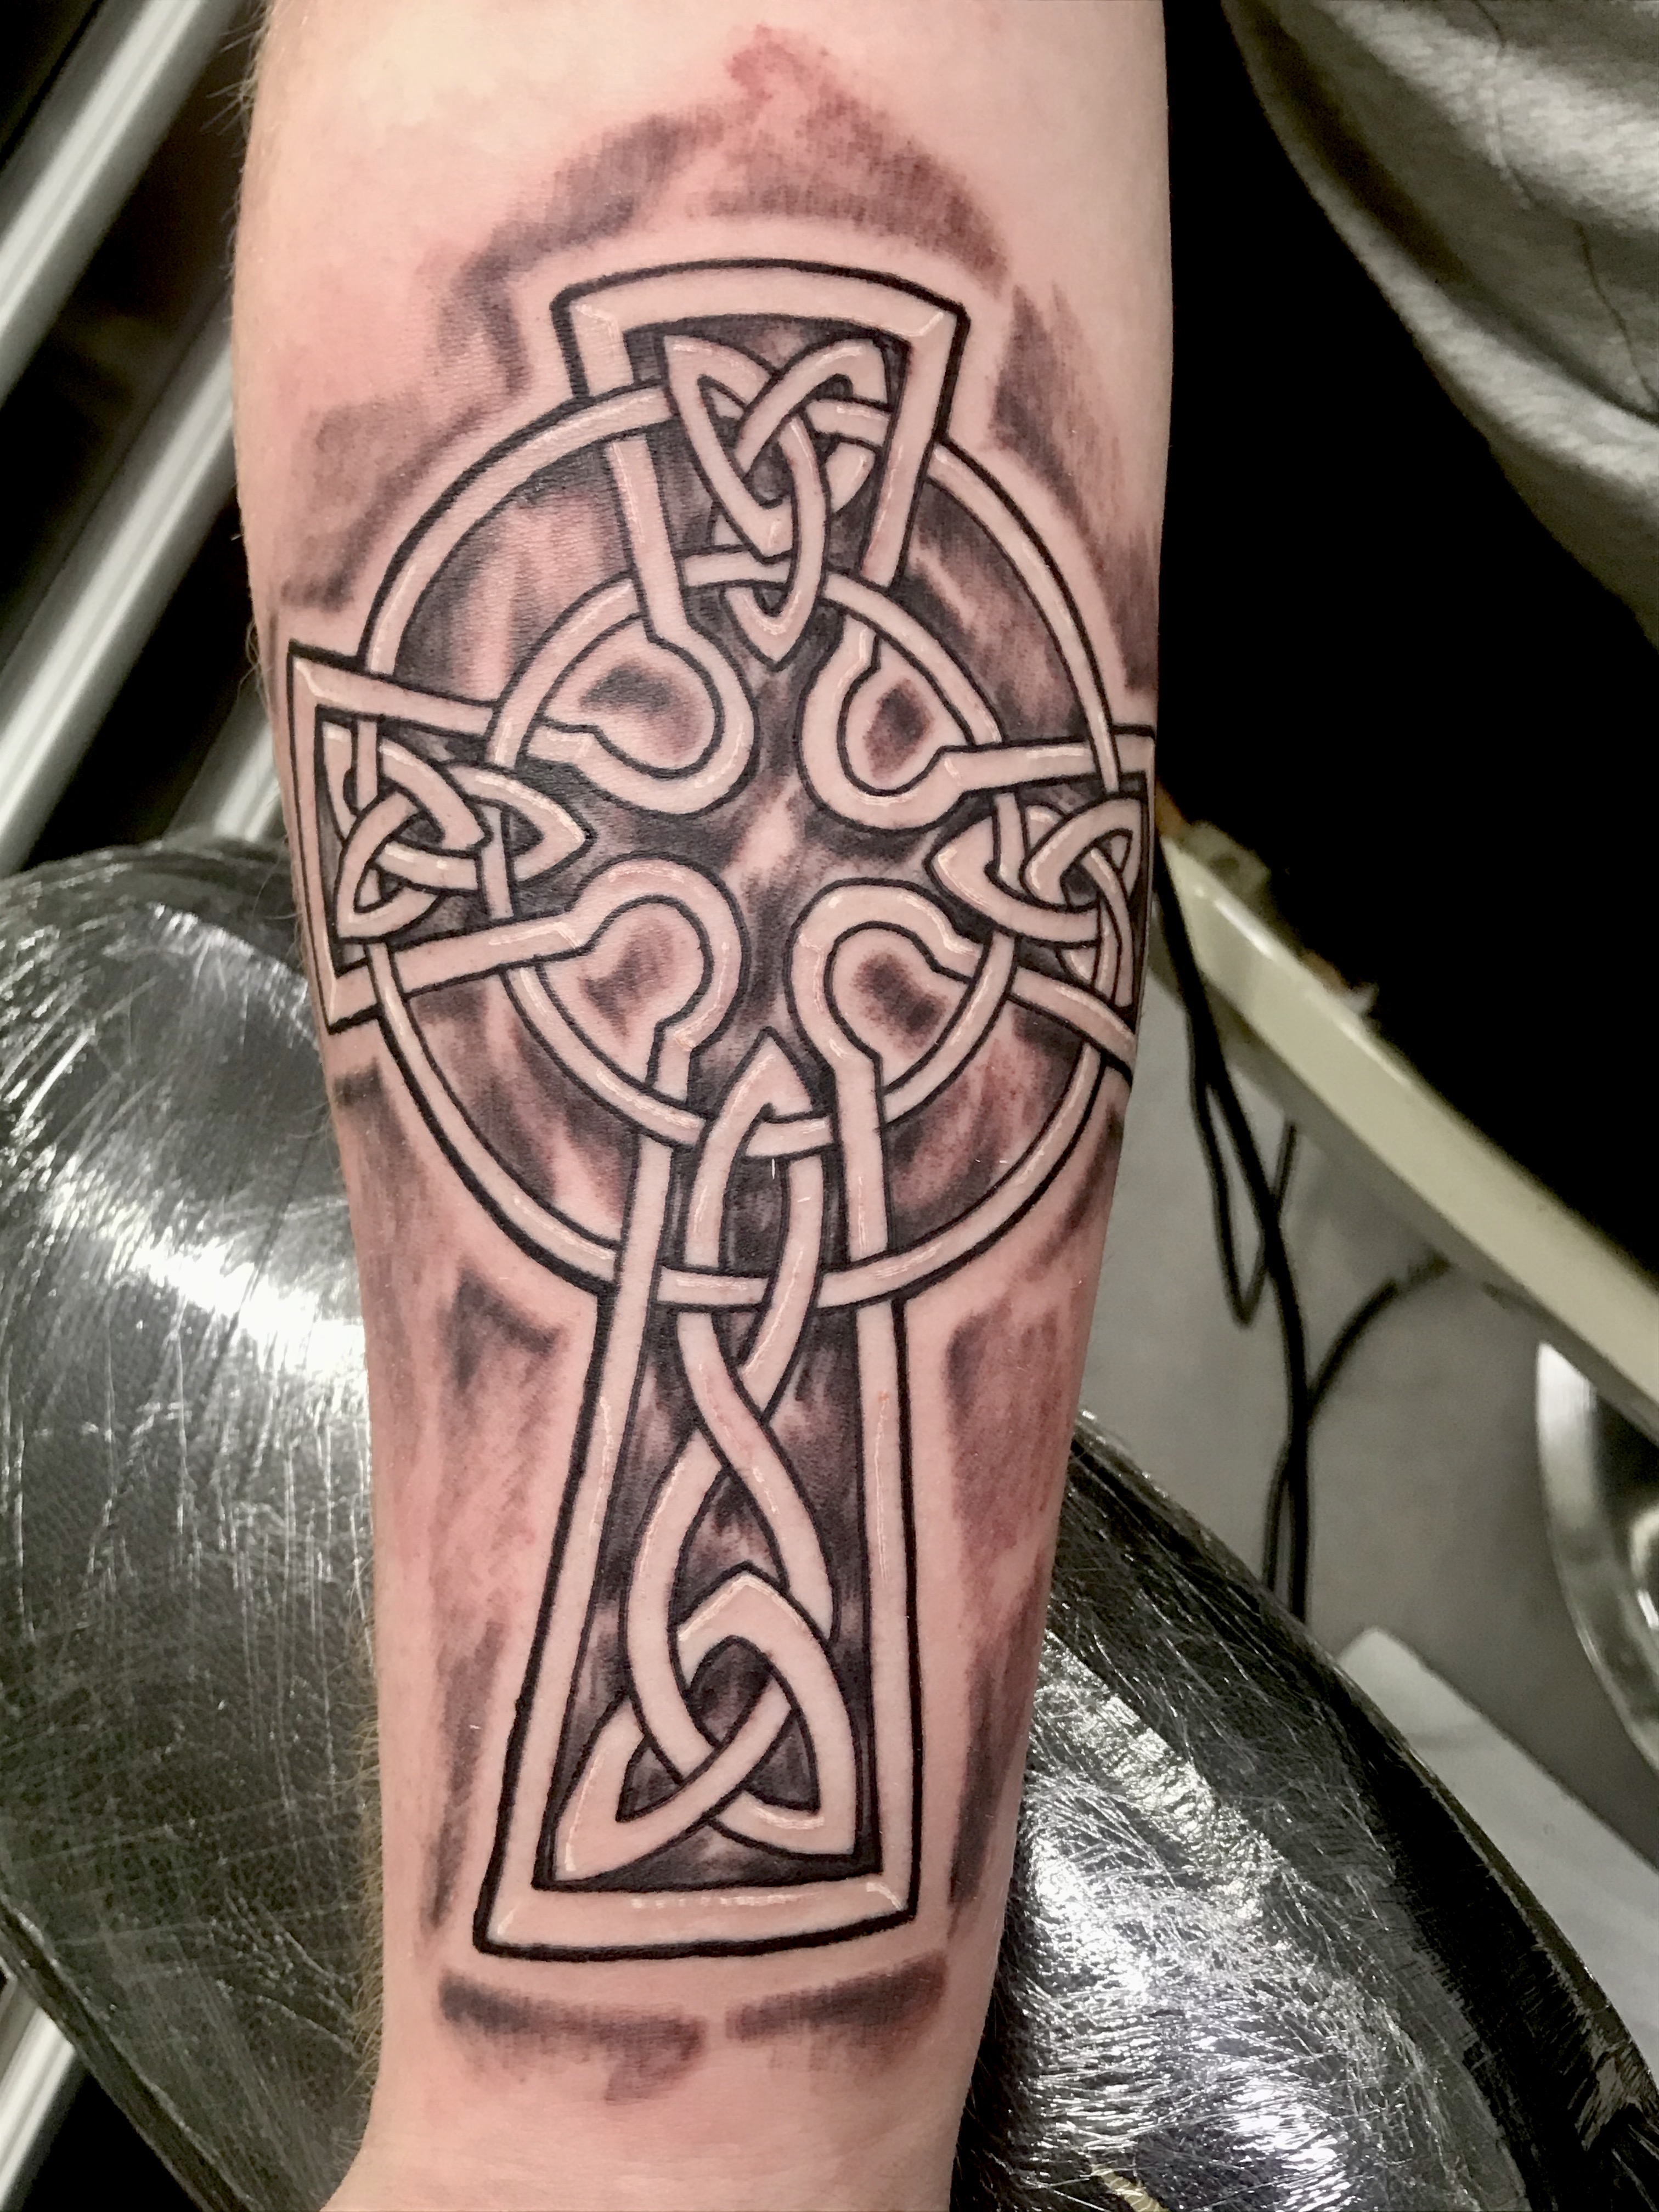 X 上的 Azarja van der Veen：「It's been awhile since I've done a Celtic cross # tattoo #tattoos #tattooer #cross #claddagh #celtic #irish #blackandgrey  https://t.co/nhLQrnhHdf https://t.co/c1mzzndscb」 / X